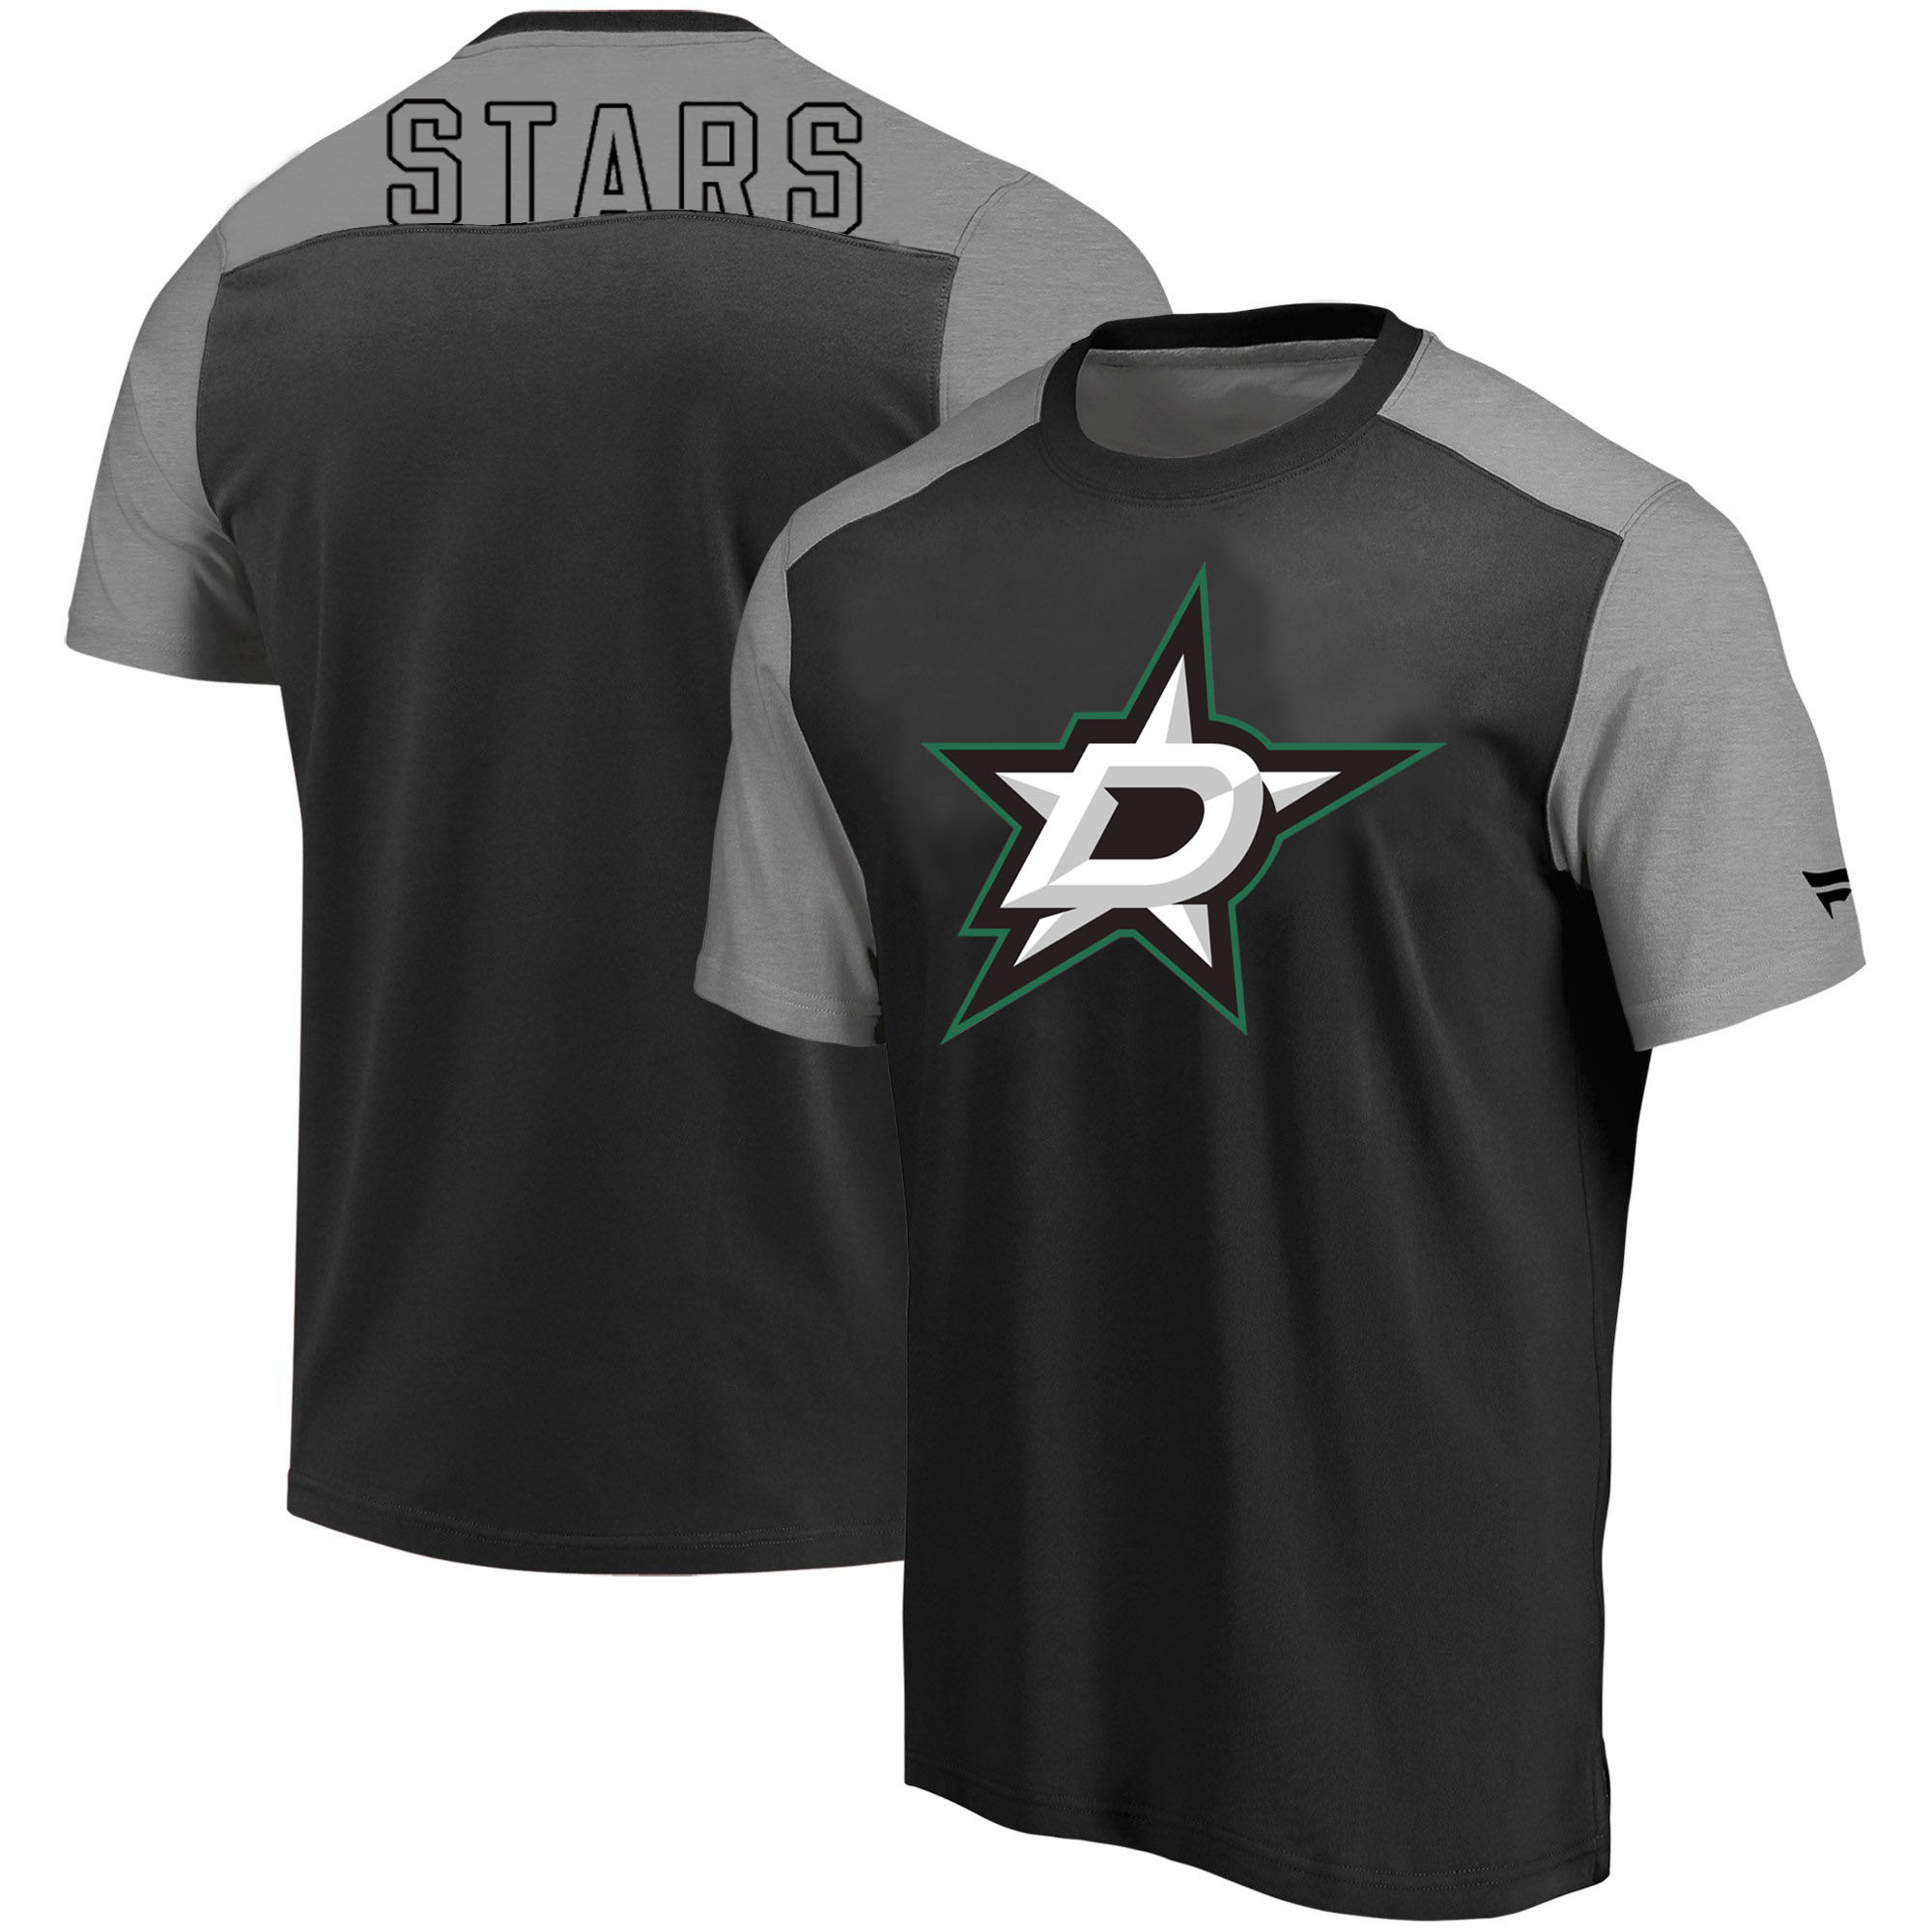 Dallas Stars Fanatics Branded Iconic Blocked T-Shirt Black Heathered Gray